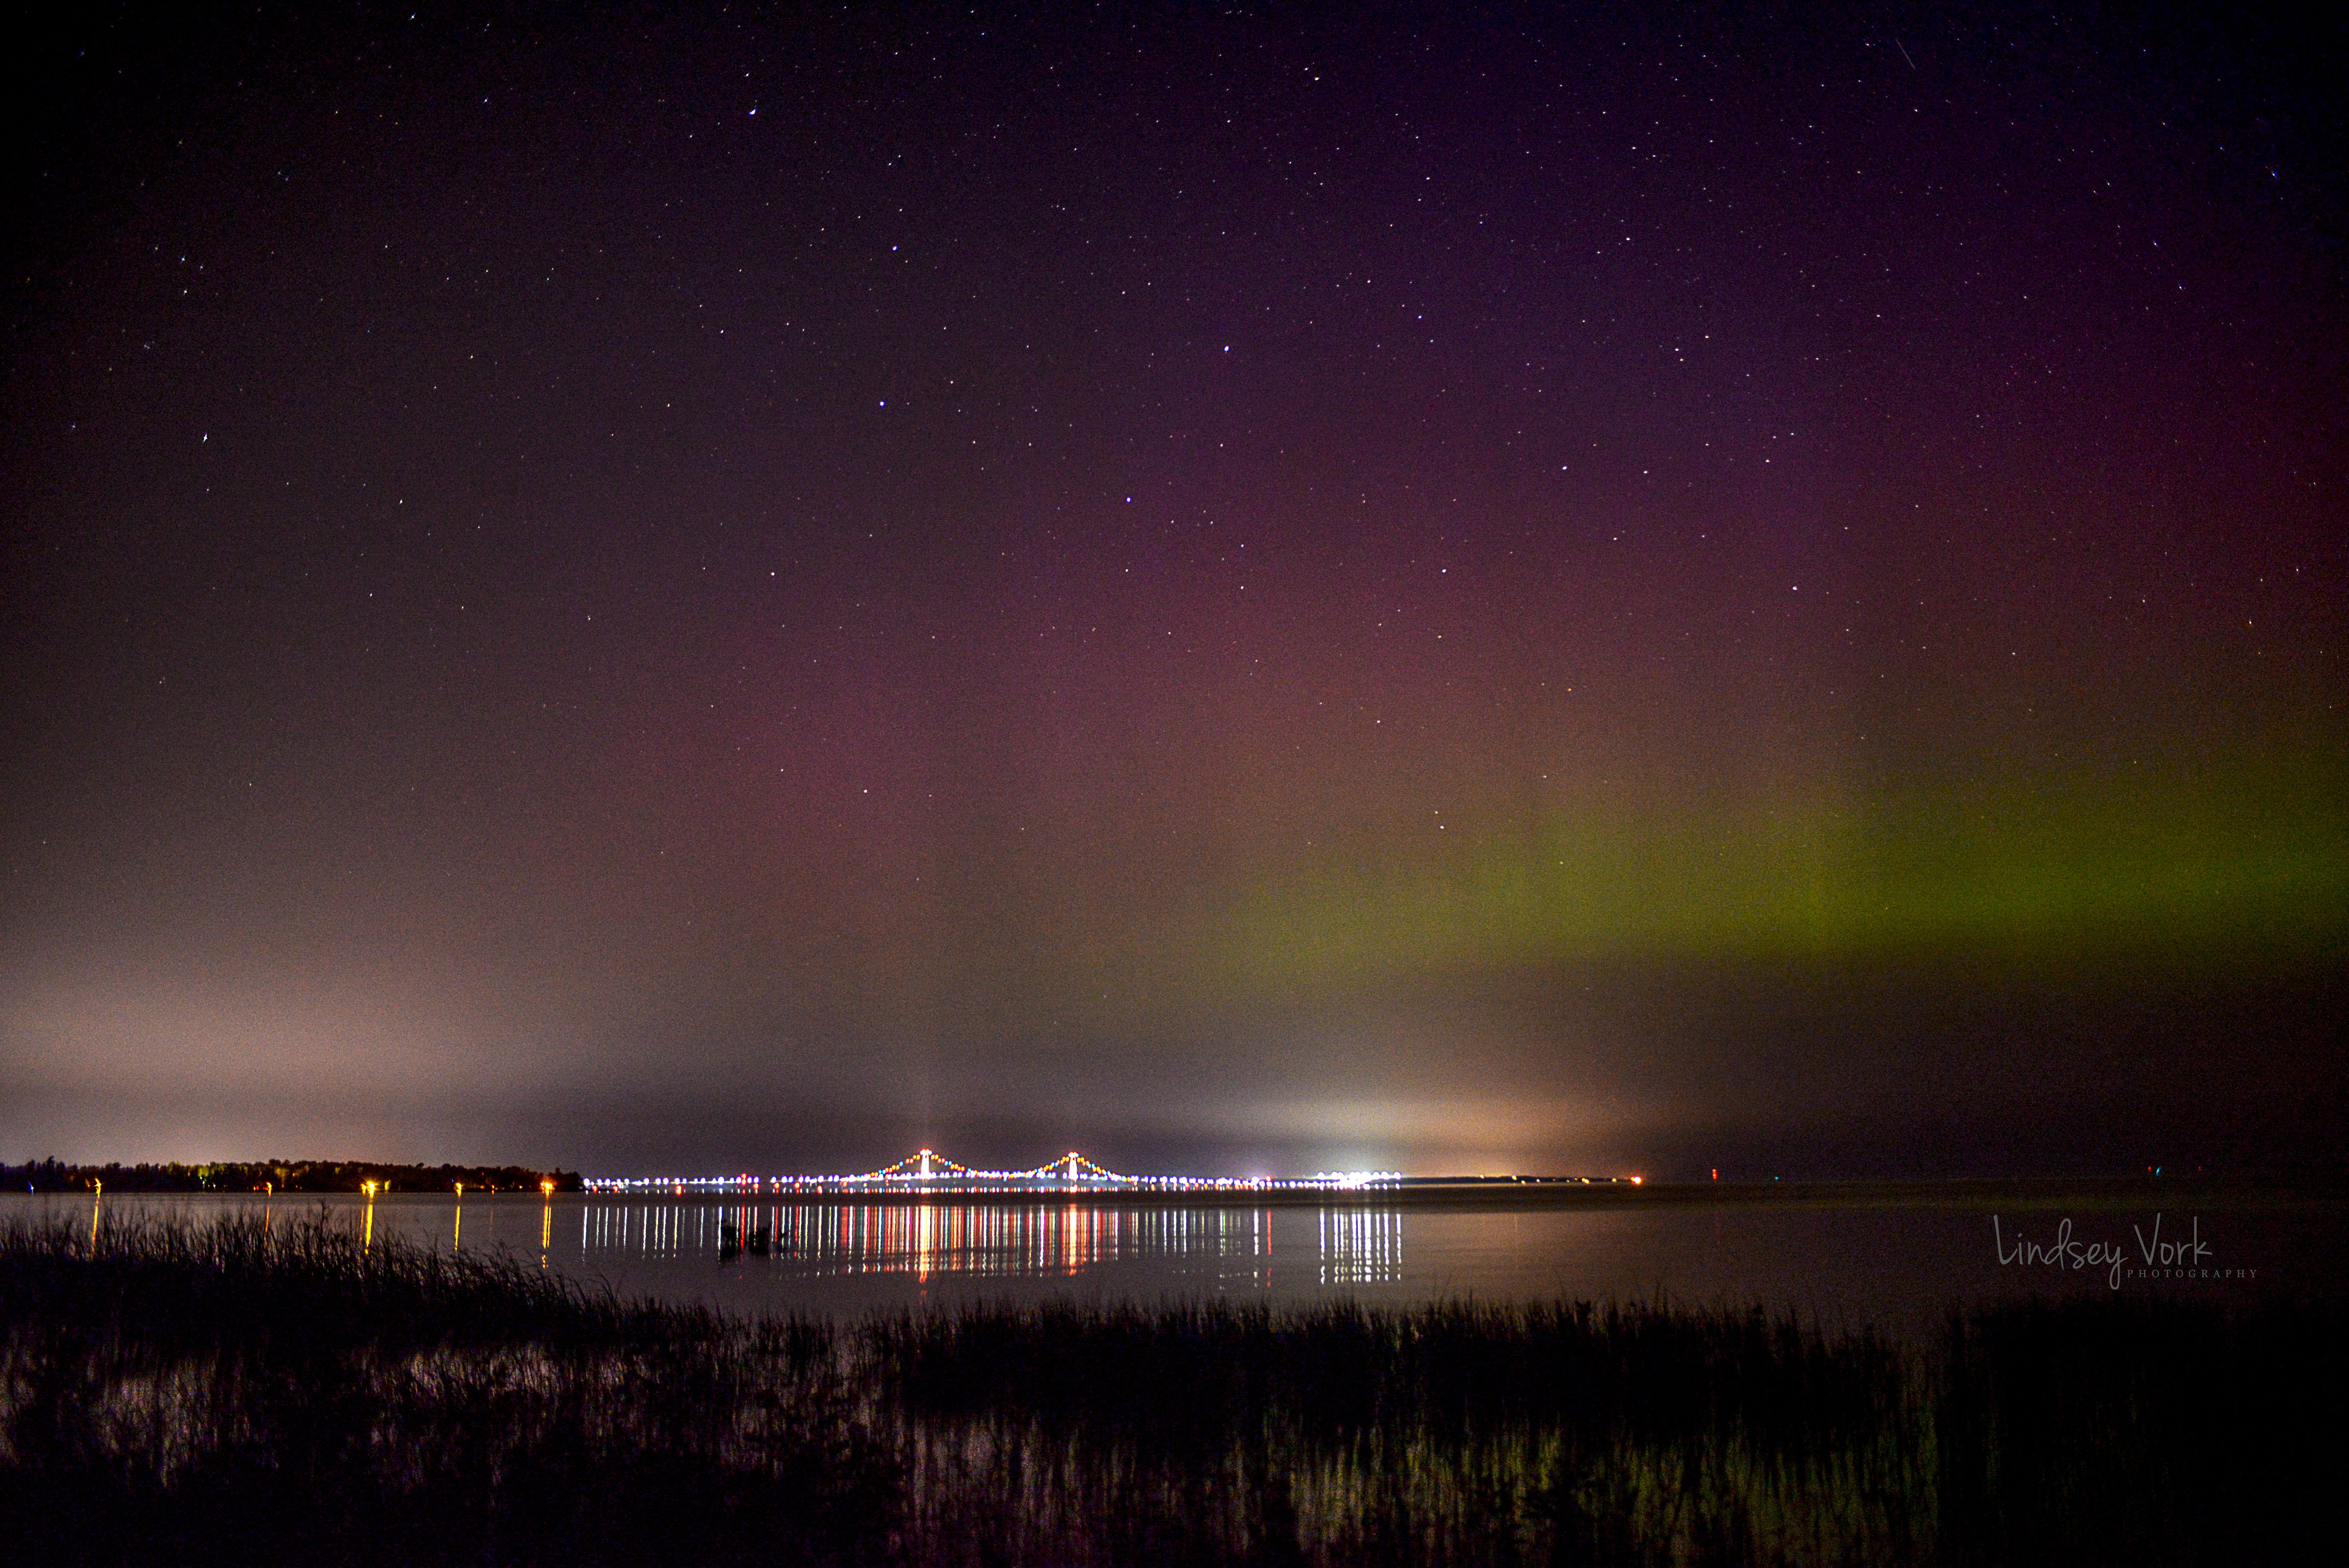 Northern Light display over the Mackinac Bridge 7-11-15